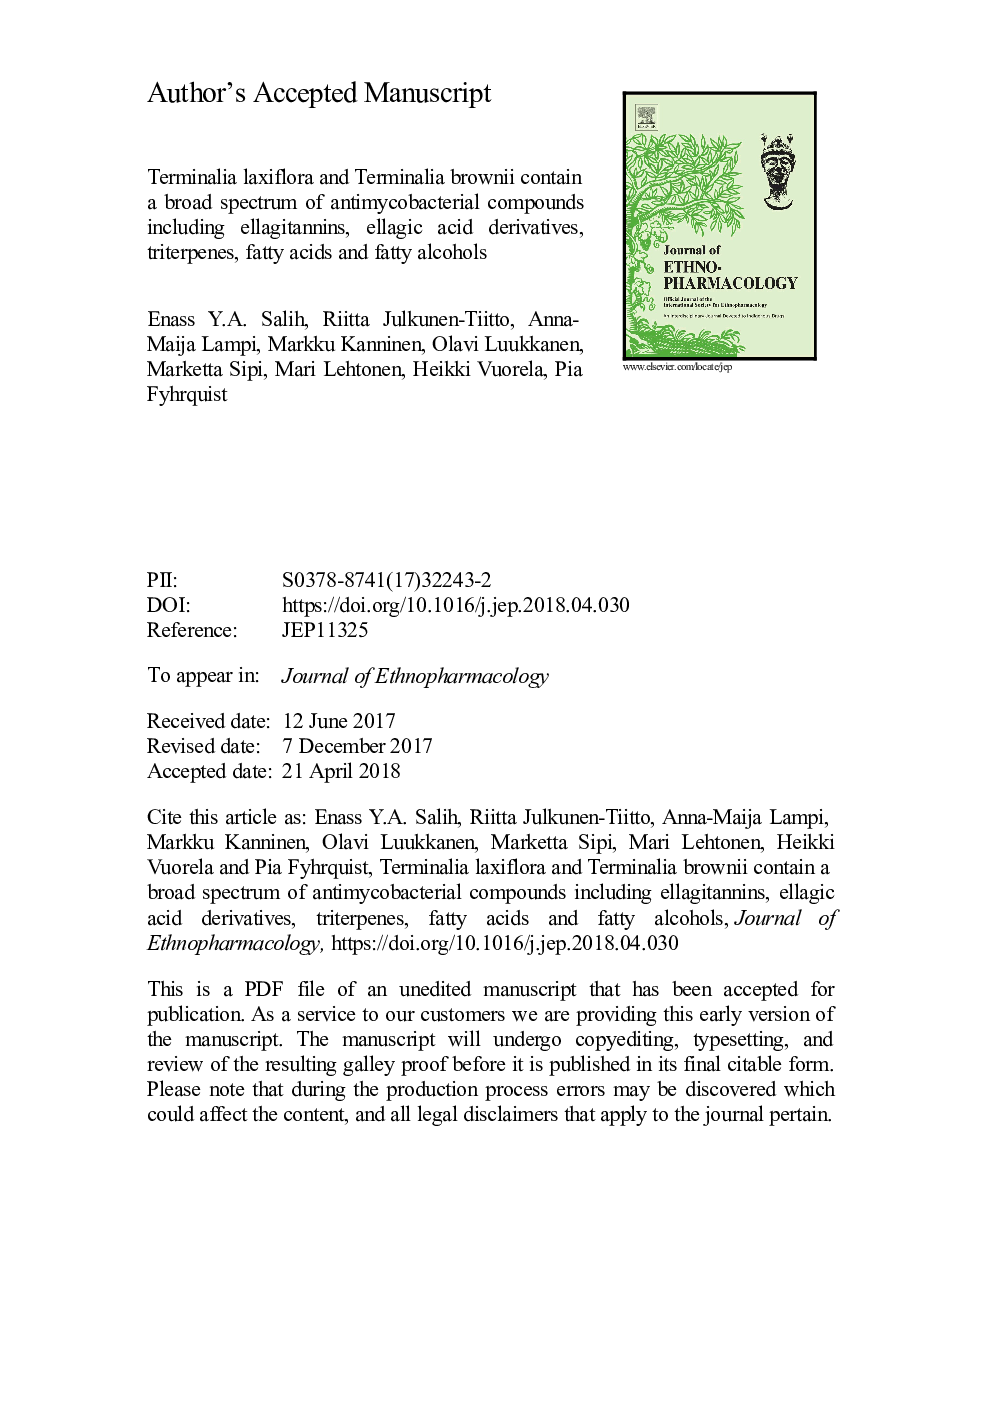 Terminalia laxiflora and Terminalia brownii contain a broad spectrum of antimycobacterial compounds including ellagitannins, ellagic acid derivatives, triterpenes, fatty acids and fatty alcohols